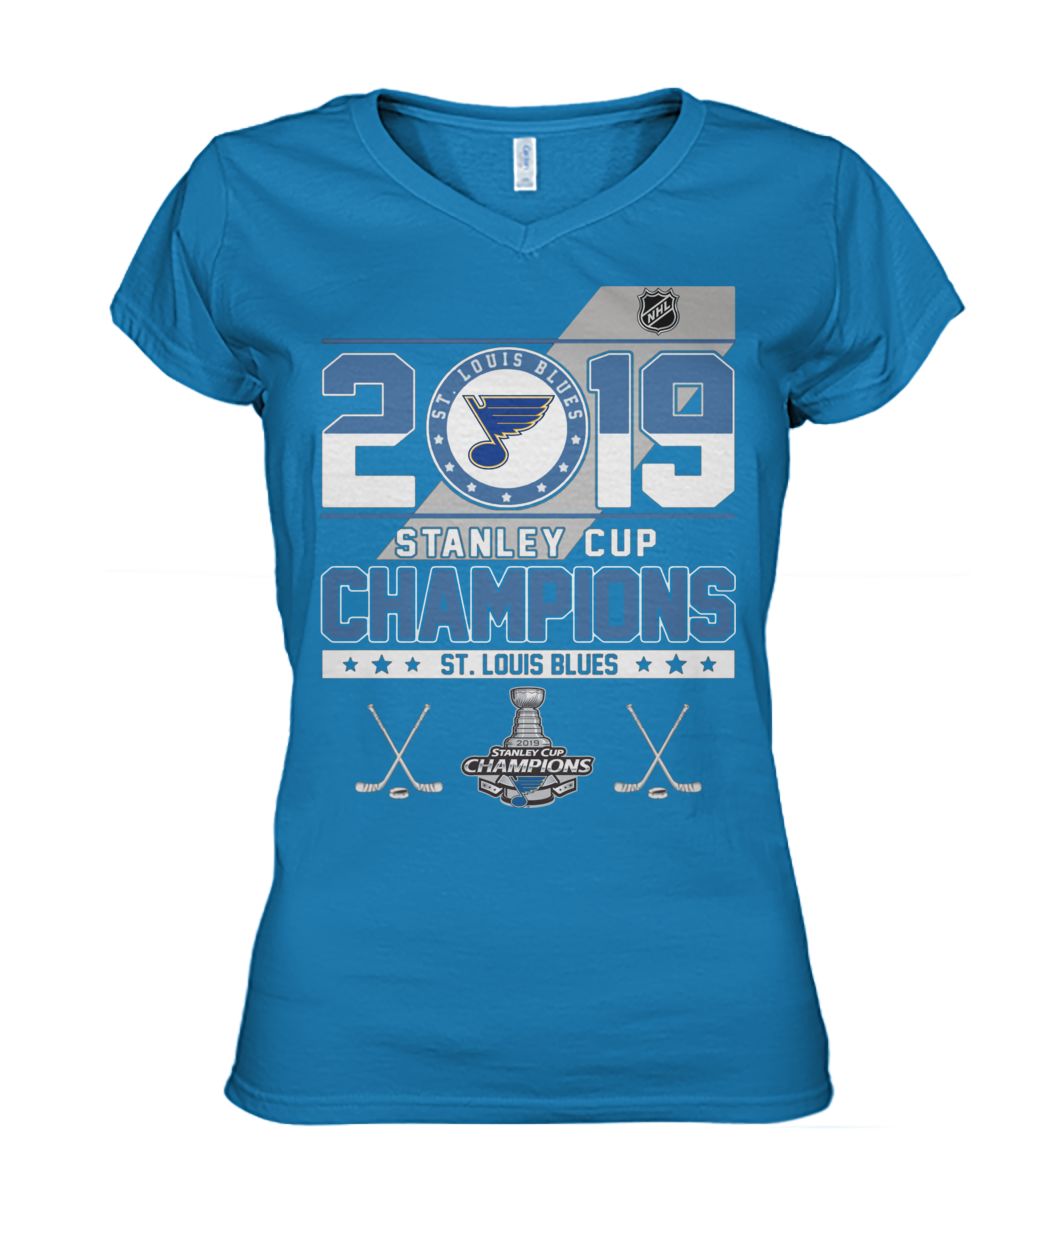 2019 st louis blues stanley cup champions women's v-neck